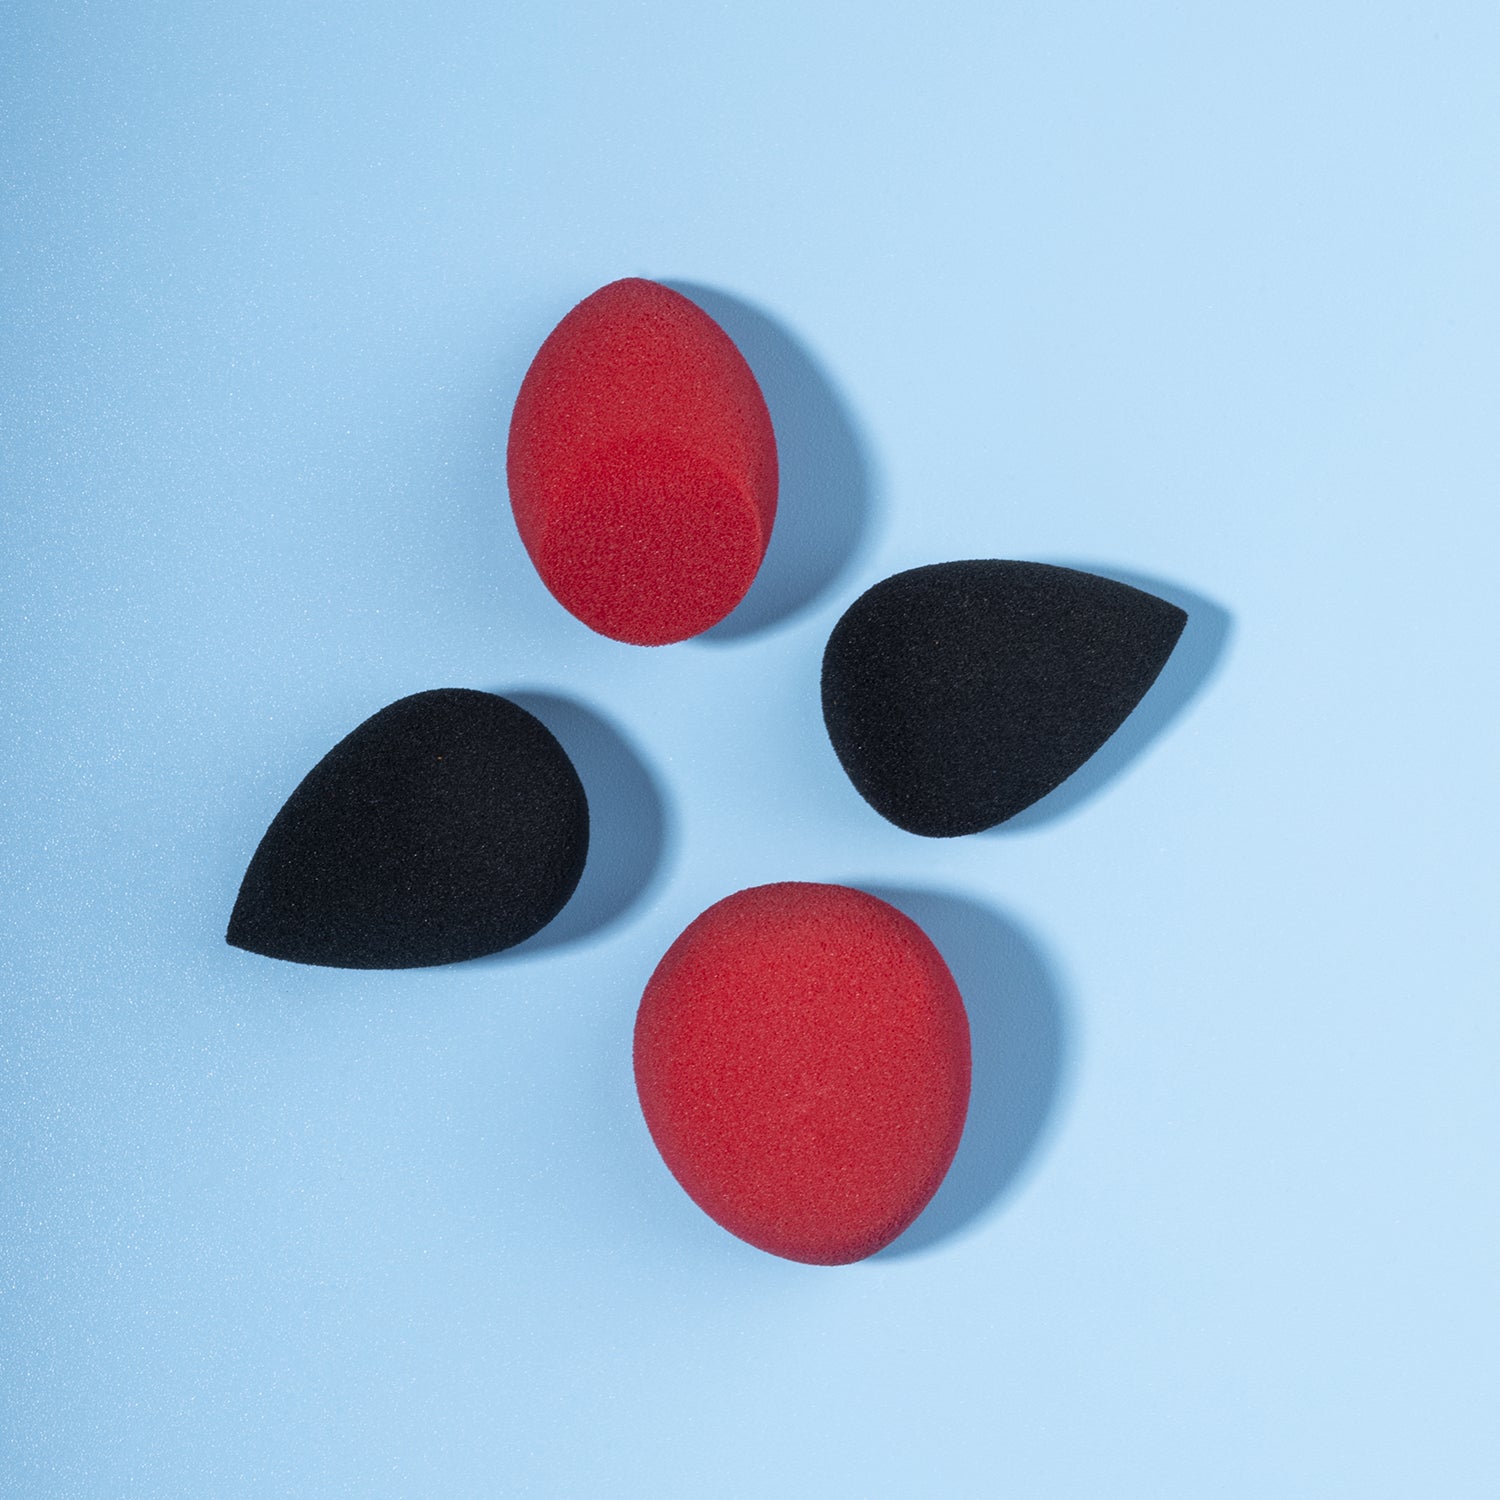 PAC Cosmetics Mini Sponge Set (Water Drop, Egg, Olive Cut) (Red, Black) (4 Pc)